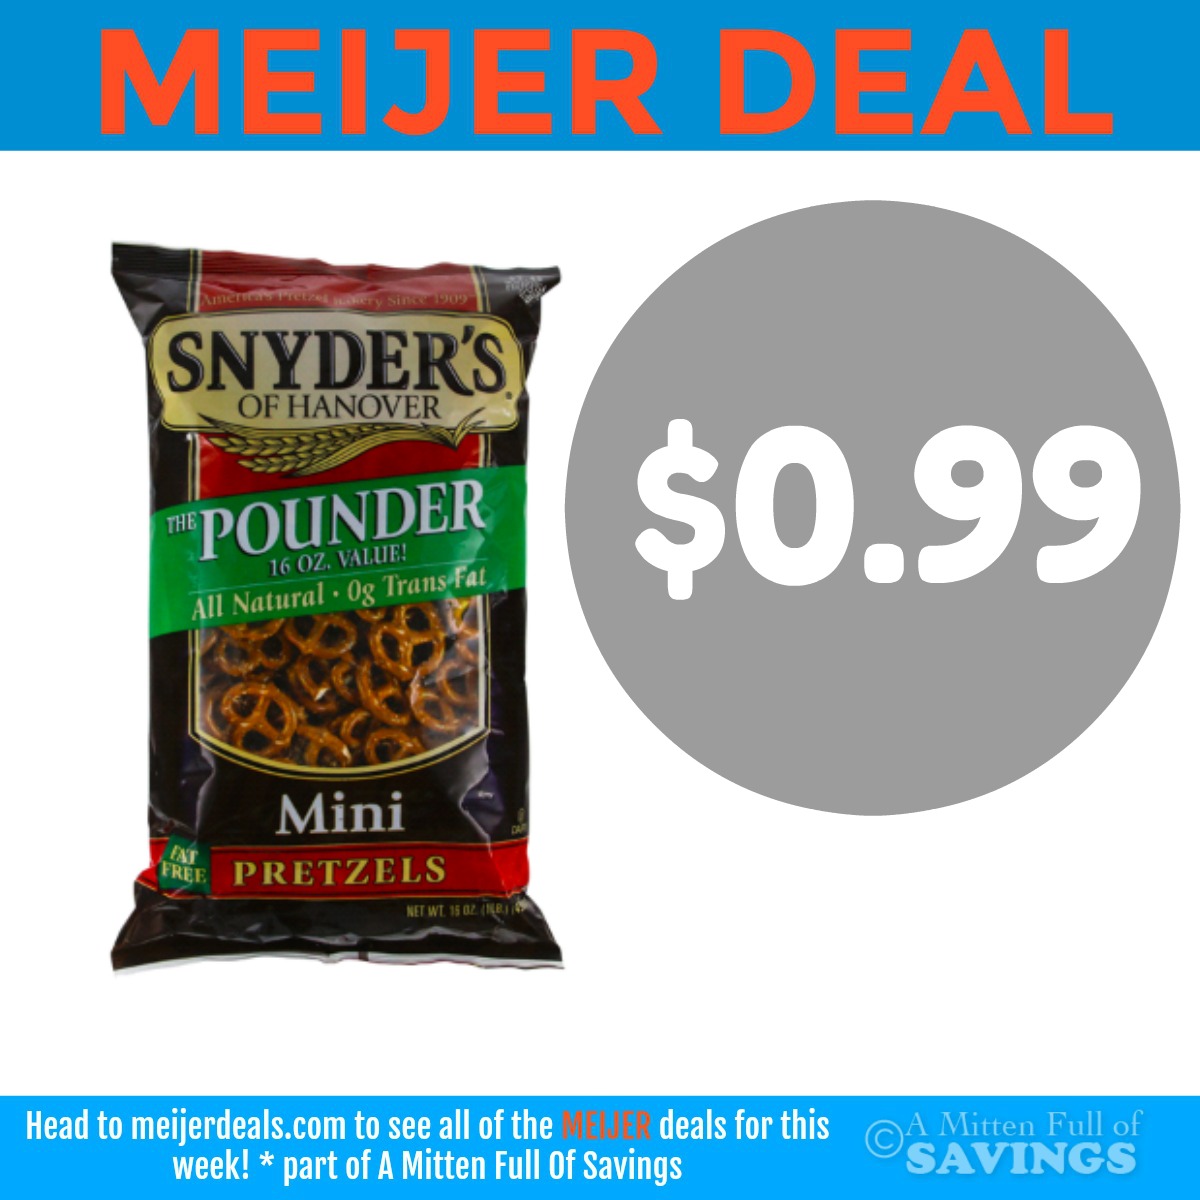 Meijer: Snyder's Pretzels $0.99 this week!